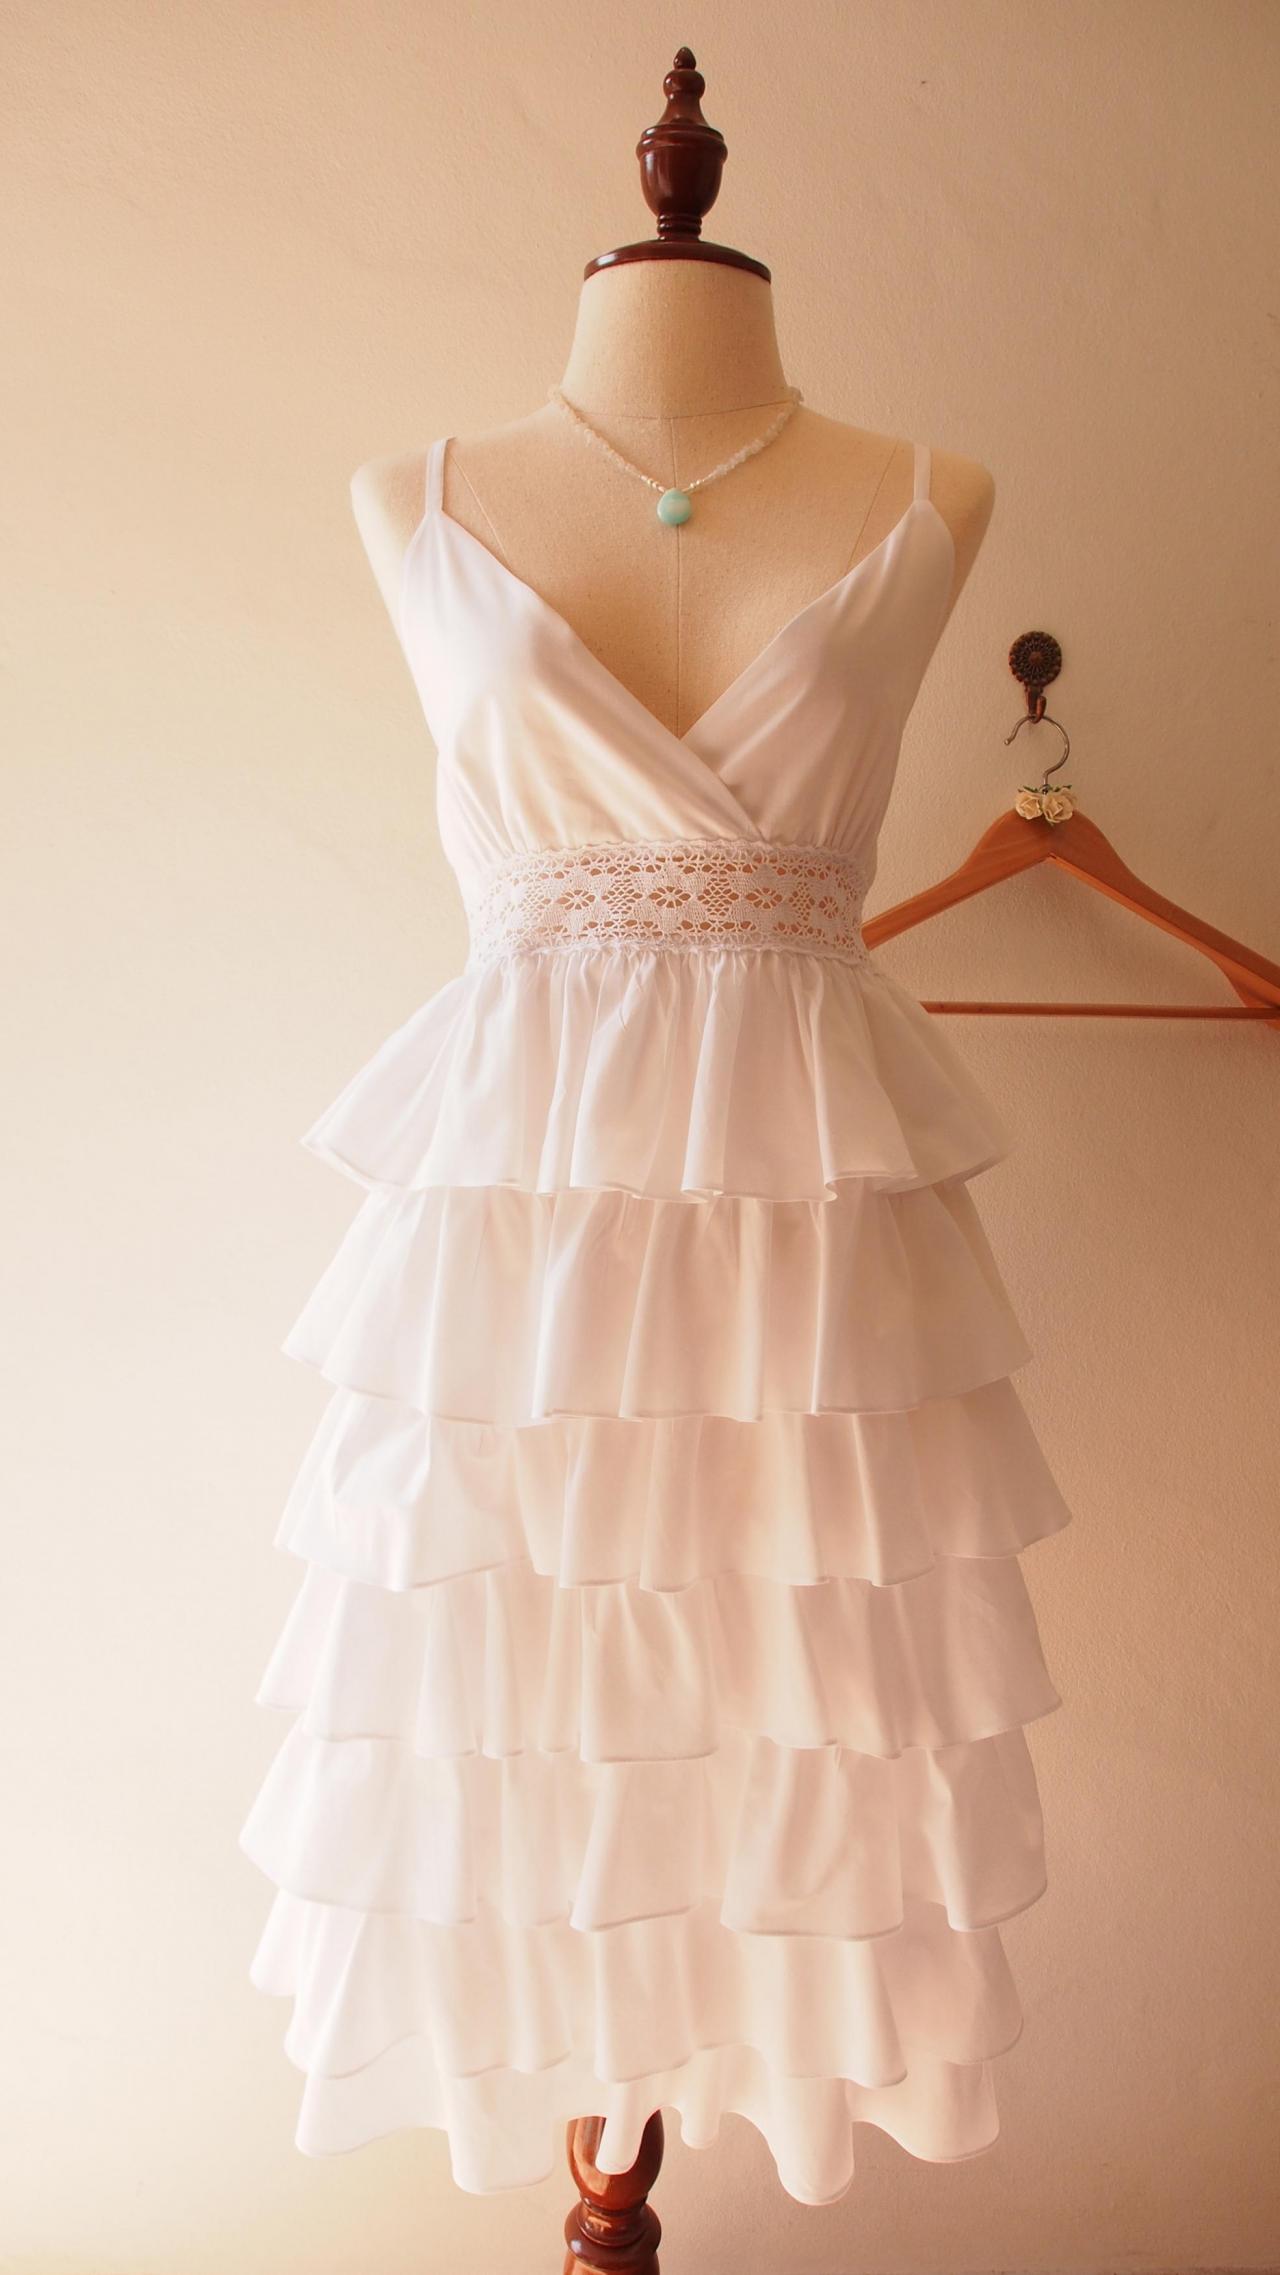 Spaghetti Strap Layer Skirt Maxi Dress Pure Cotton Beach Wedding White Long Dress Rustic Wedding Summer Party Boho Bohemian Fantasy Style